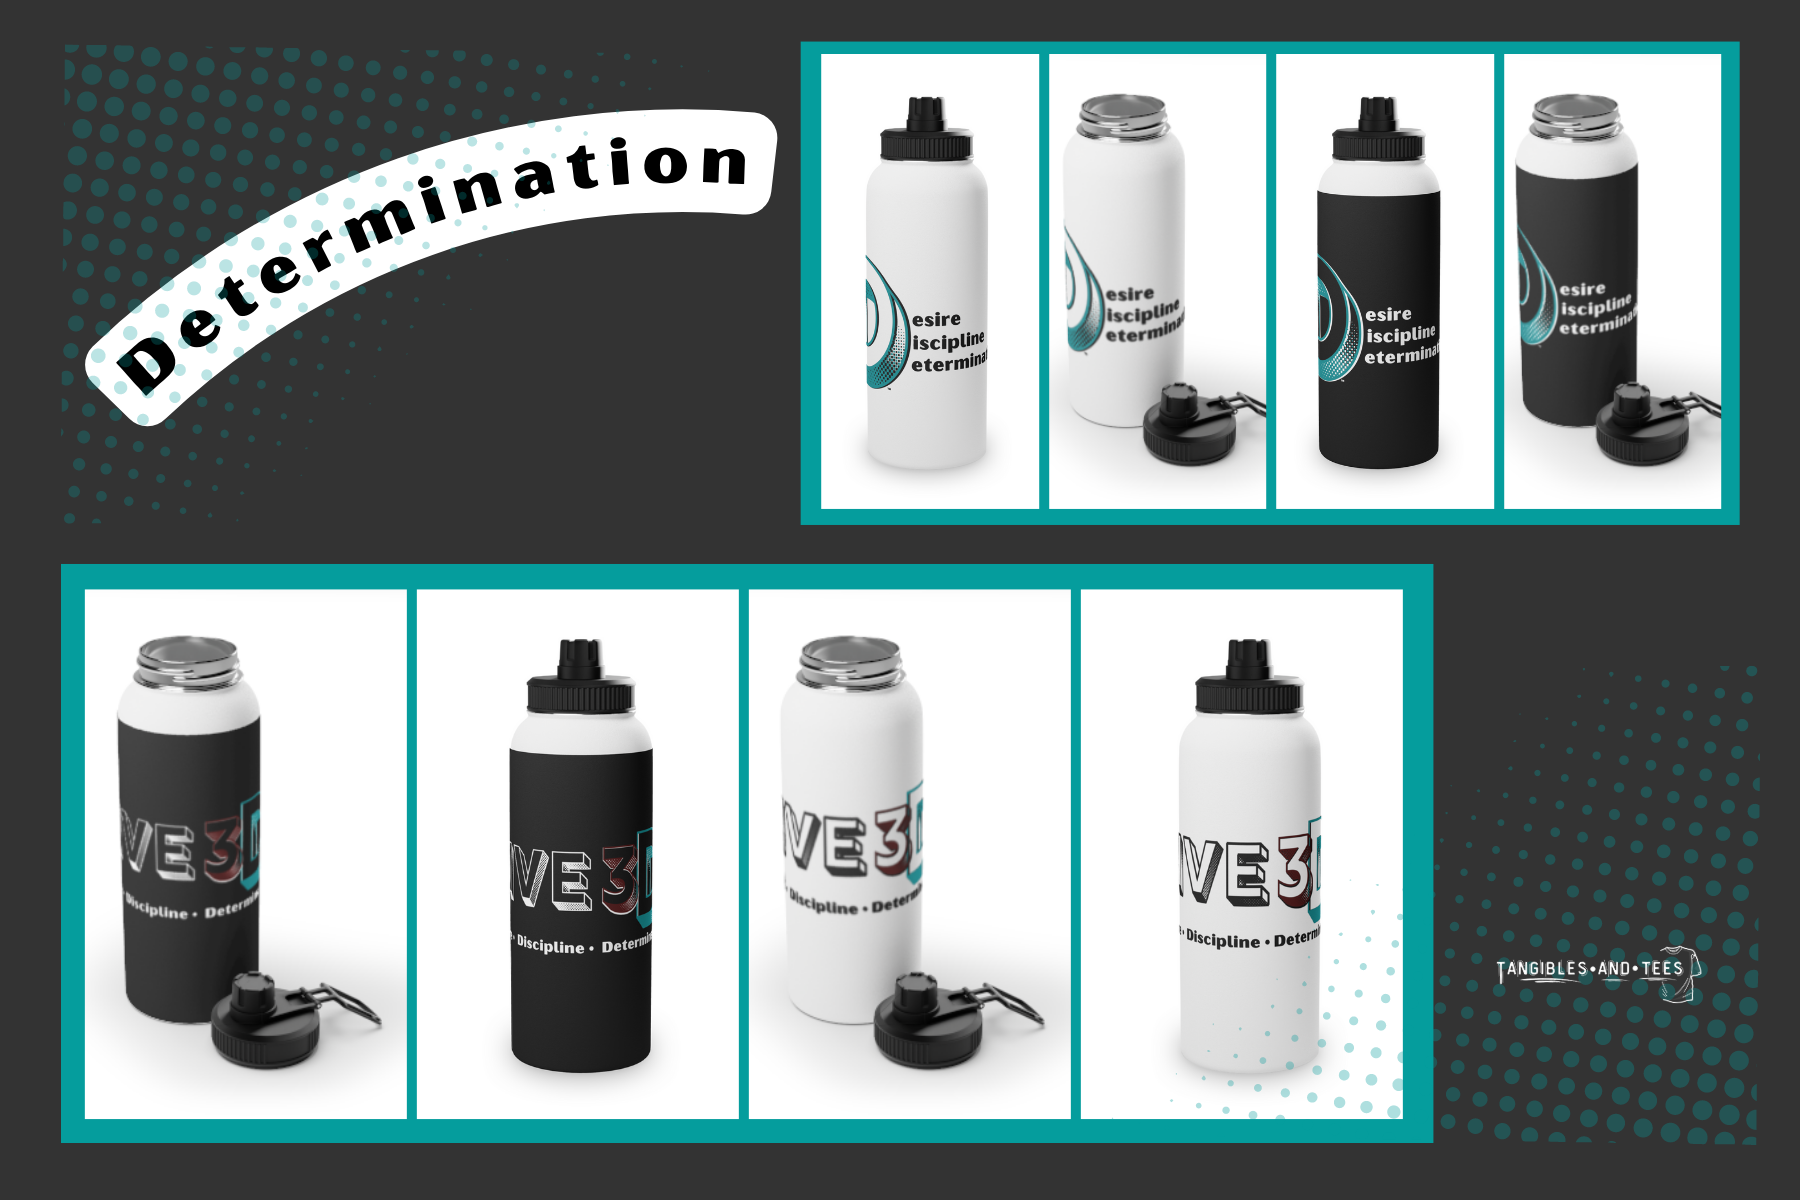 23b-water bottles-Determined (1)